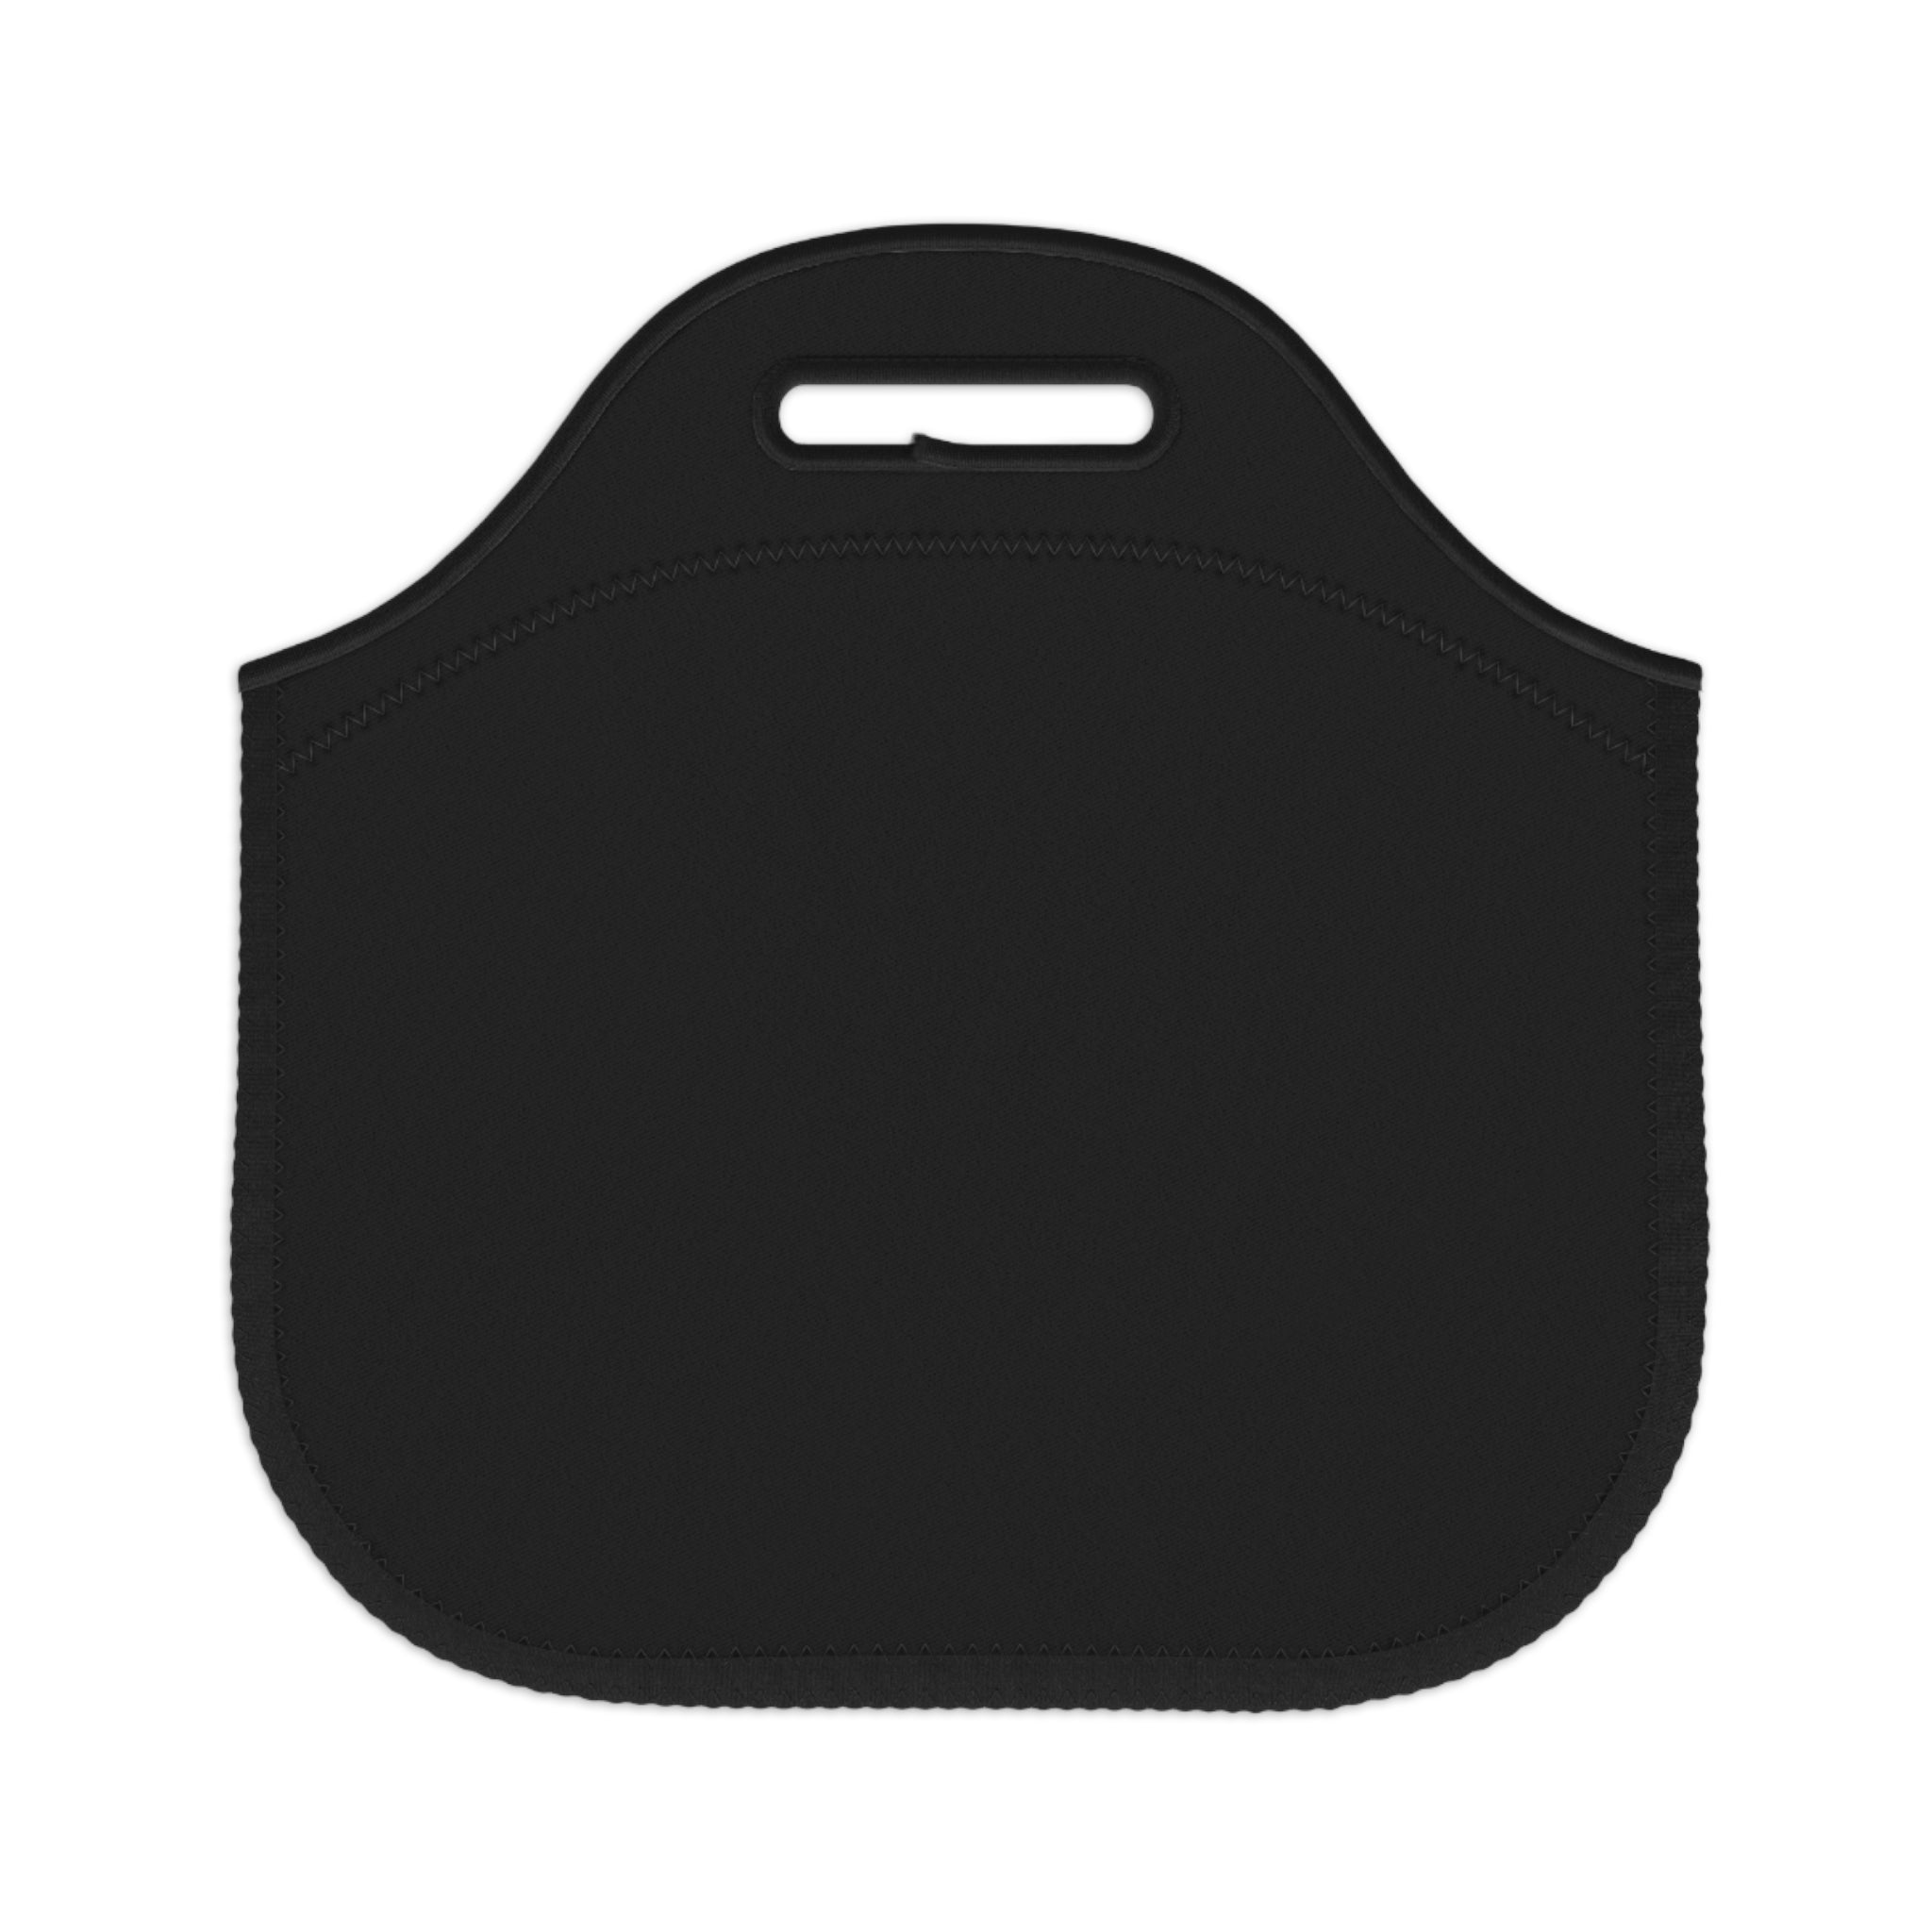 Atomic Cat, Mid Mod Geometric Cool, Kitsch Adult Retro Neoprene Lunch Bag Bags